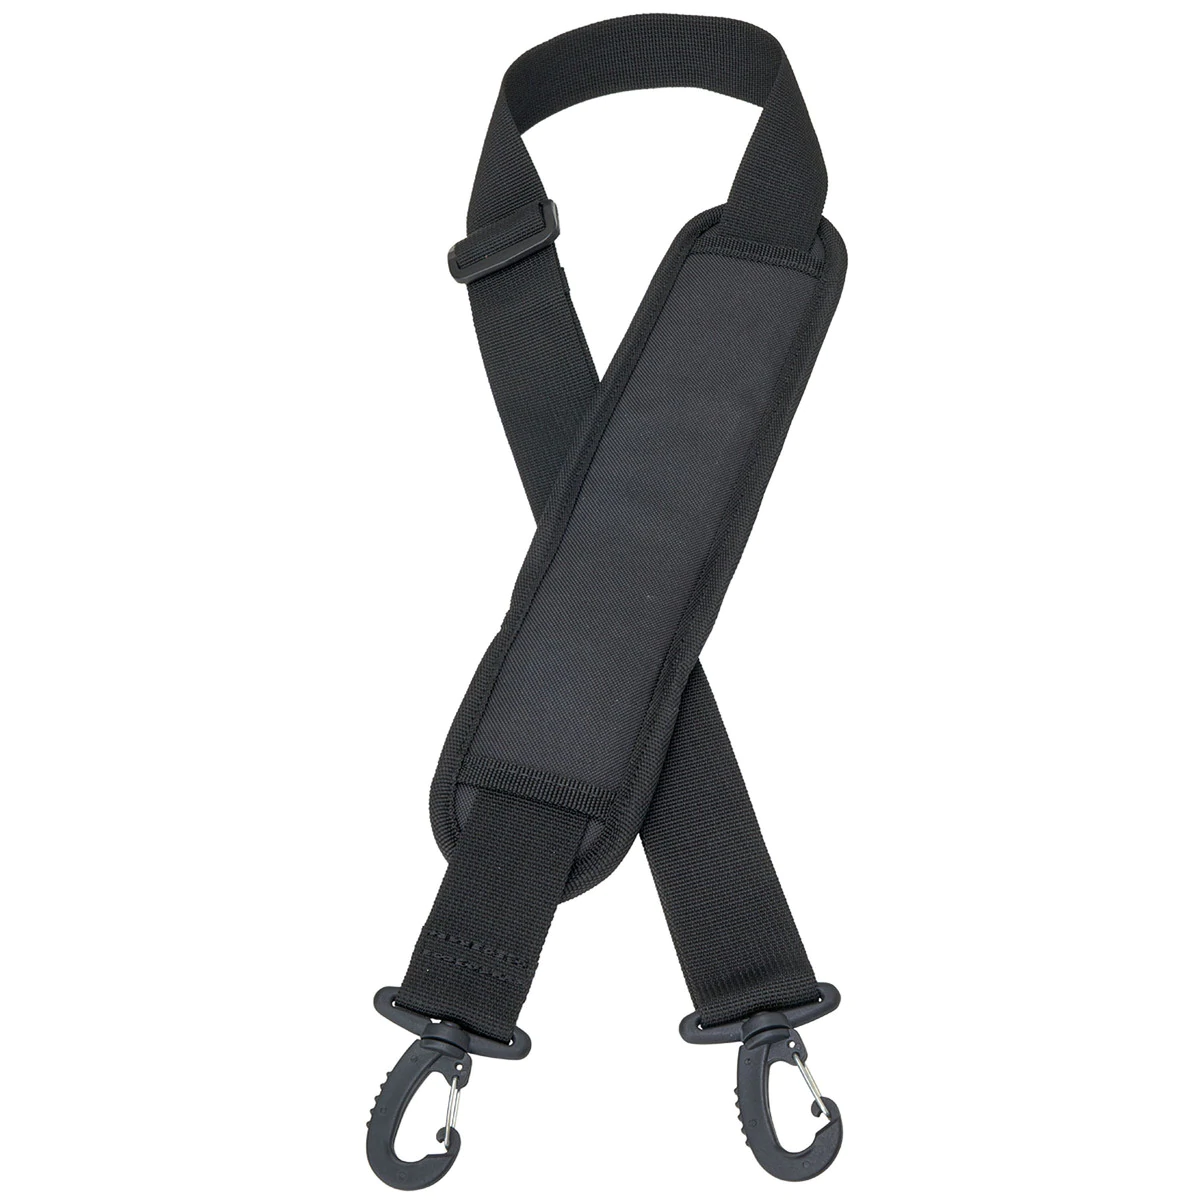 PROTEC Shoulder Strap, Thick Non-Slip Pad, Duraflex Snaps